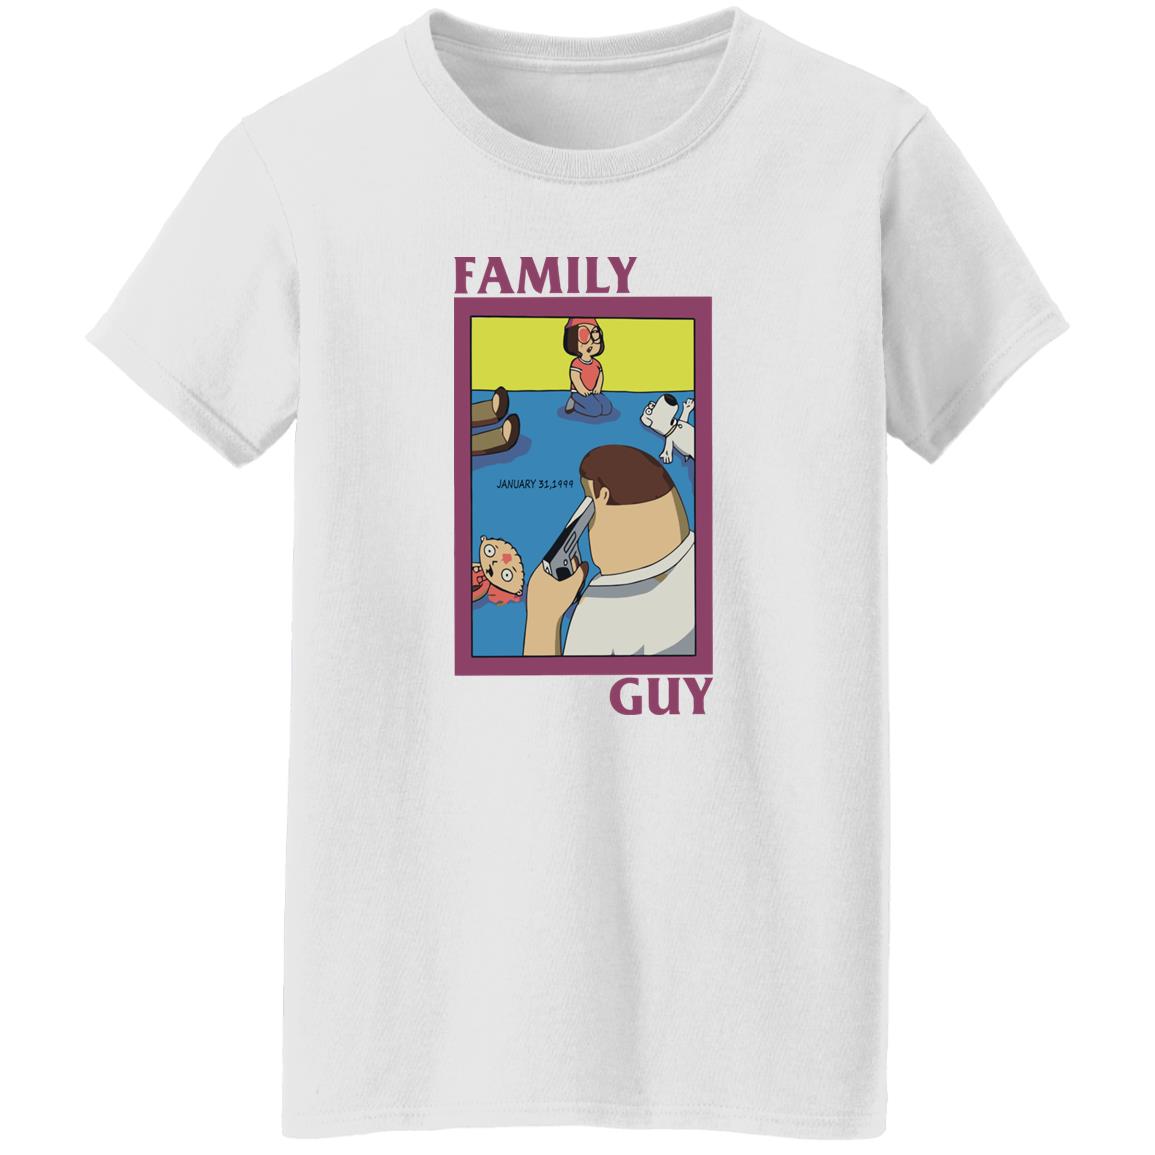 Black family guy shirt - Bucktee.com